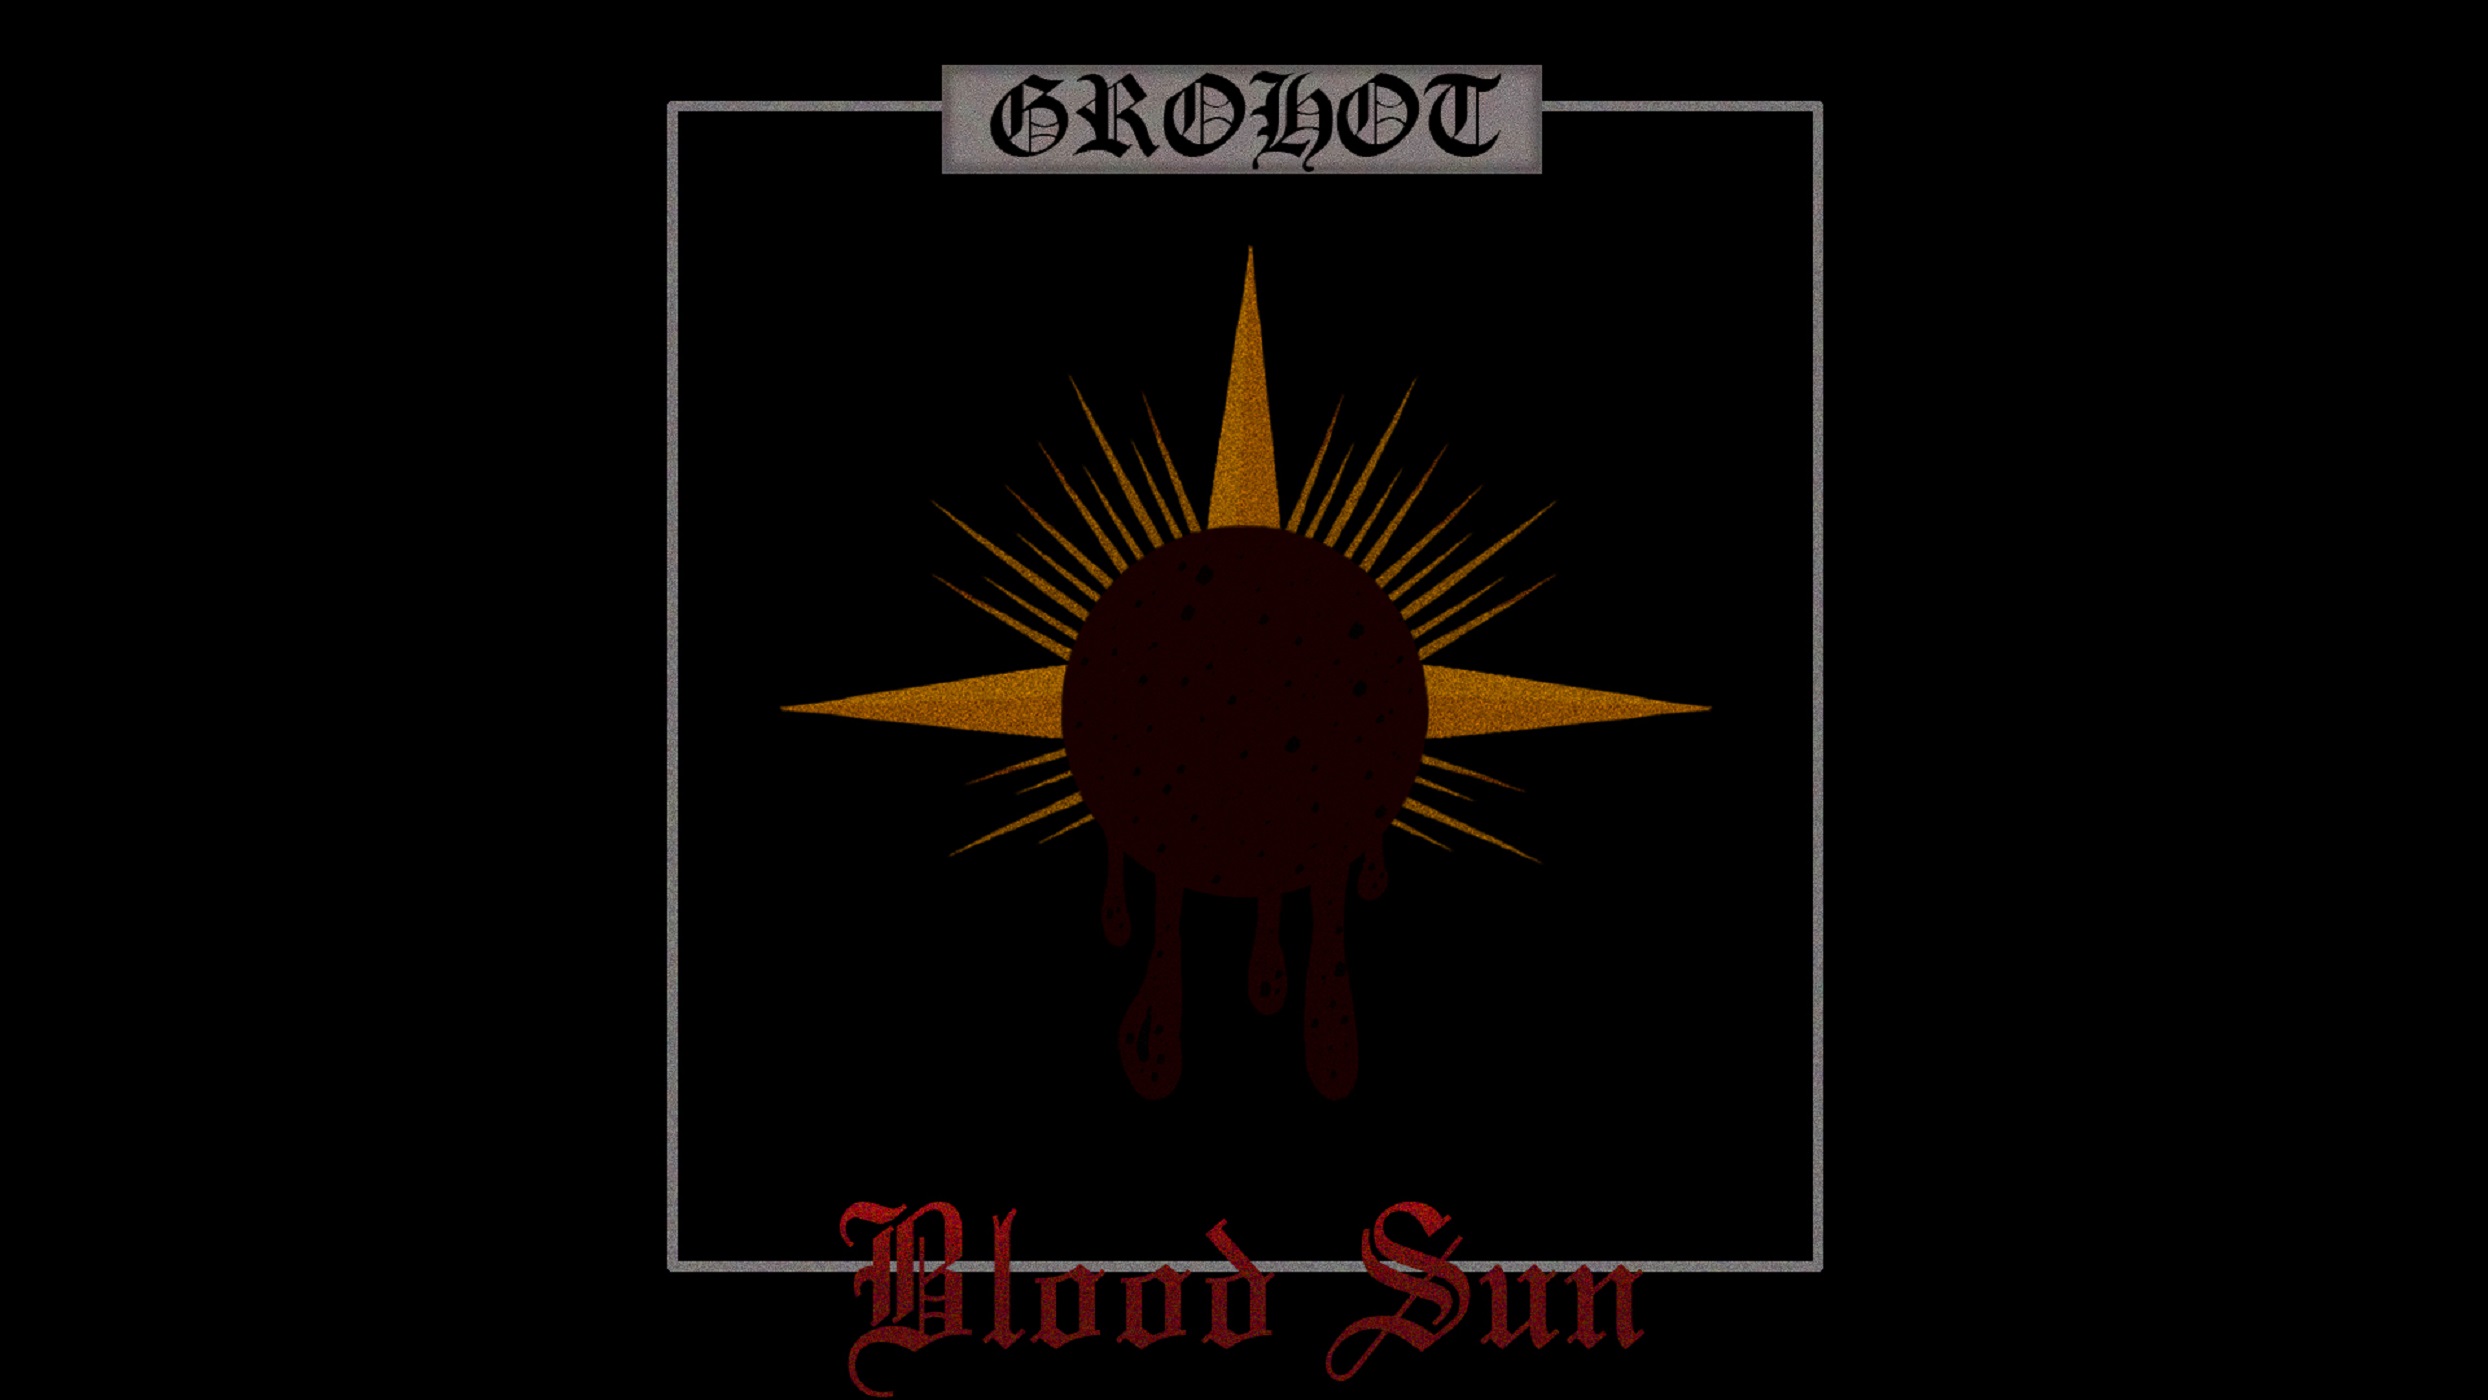 Grohot lanseaza single-ul “Blood Sun”